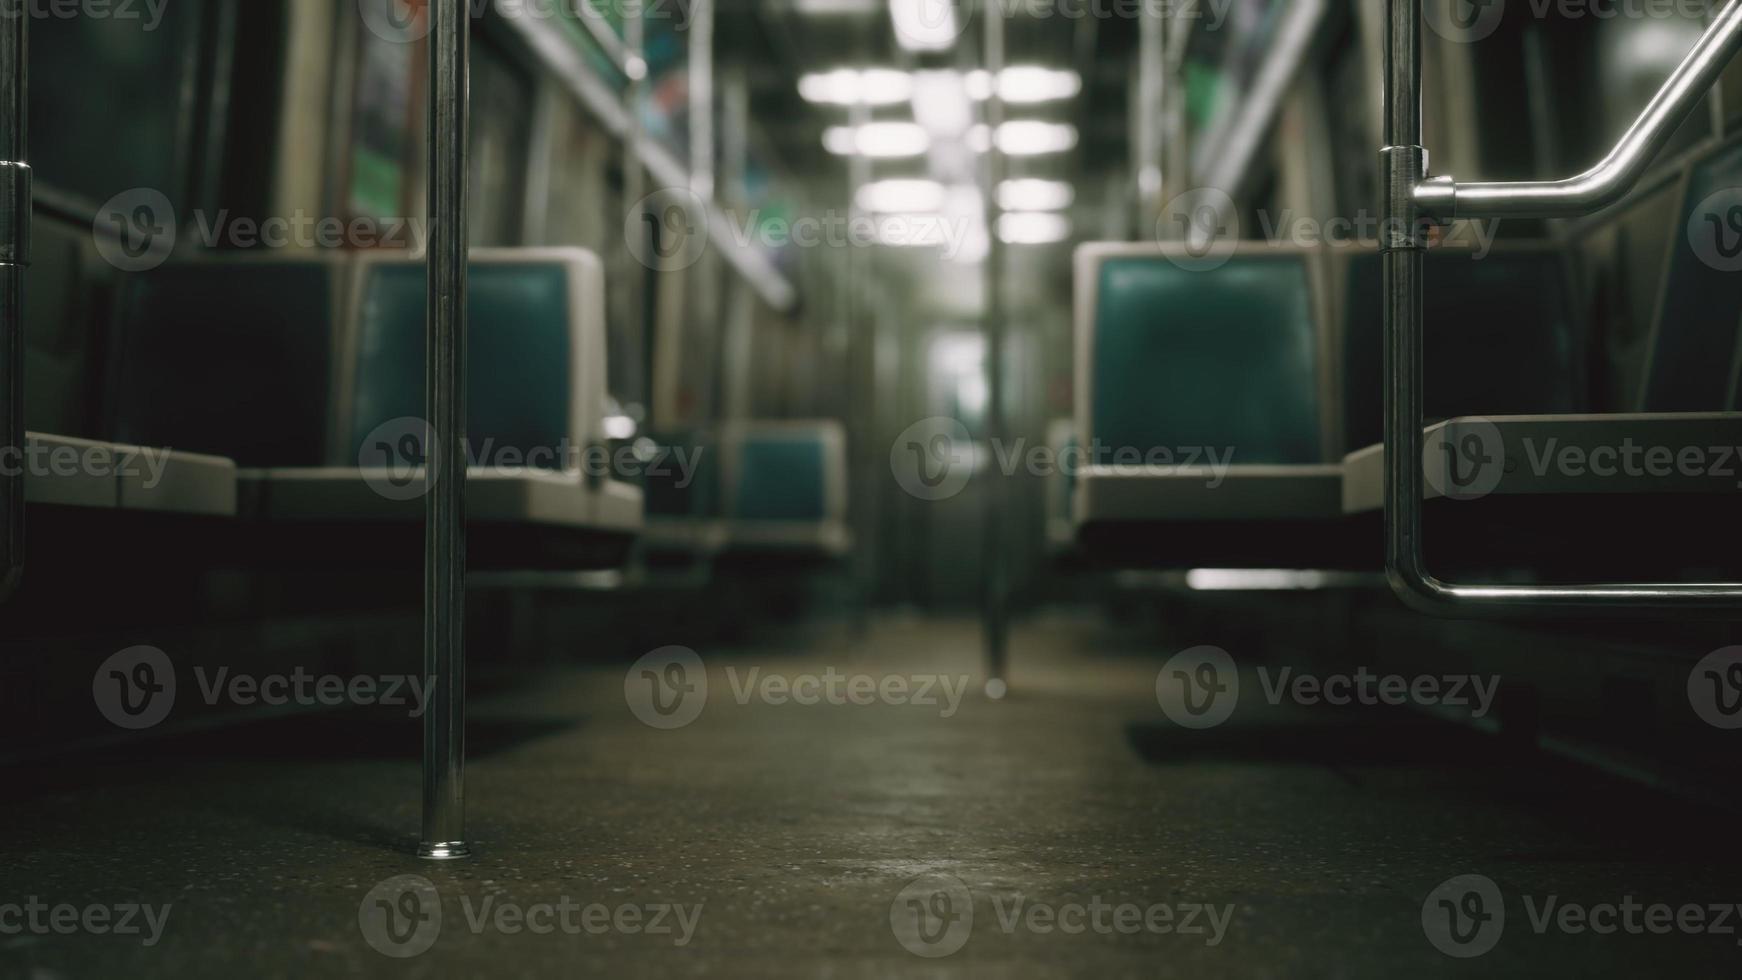 U-Bahn-Wagen in den USA wegen der Coronavirus-Covid-19-Epidemie leer foto